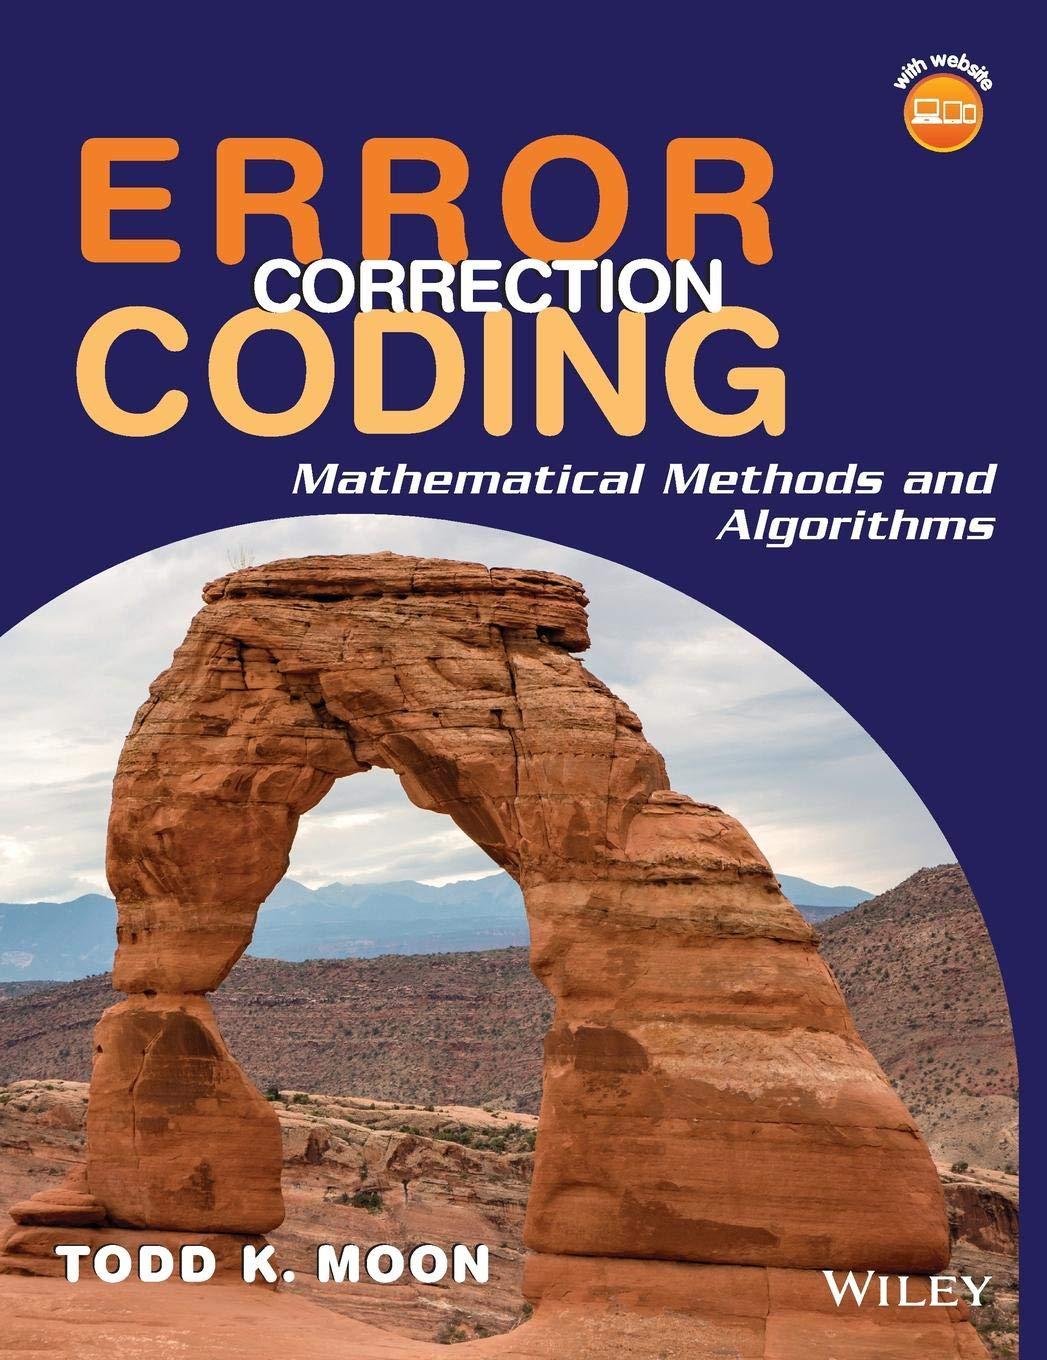 error correction coding mathematical methods and algorithms 1st edition todd k. moon 0471648000, 9780471648000